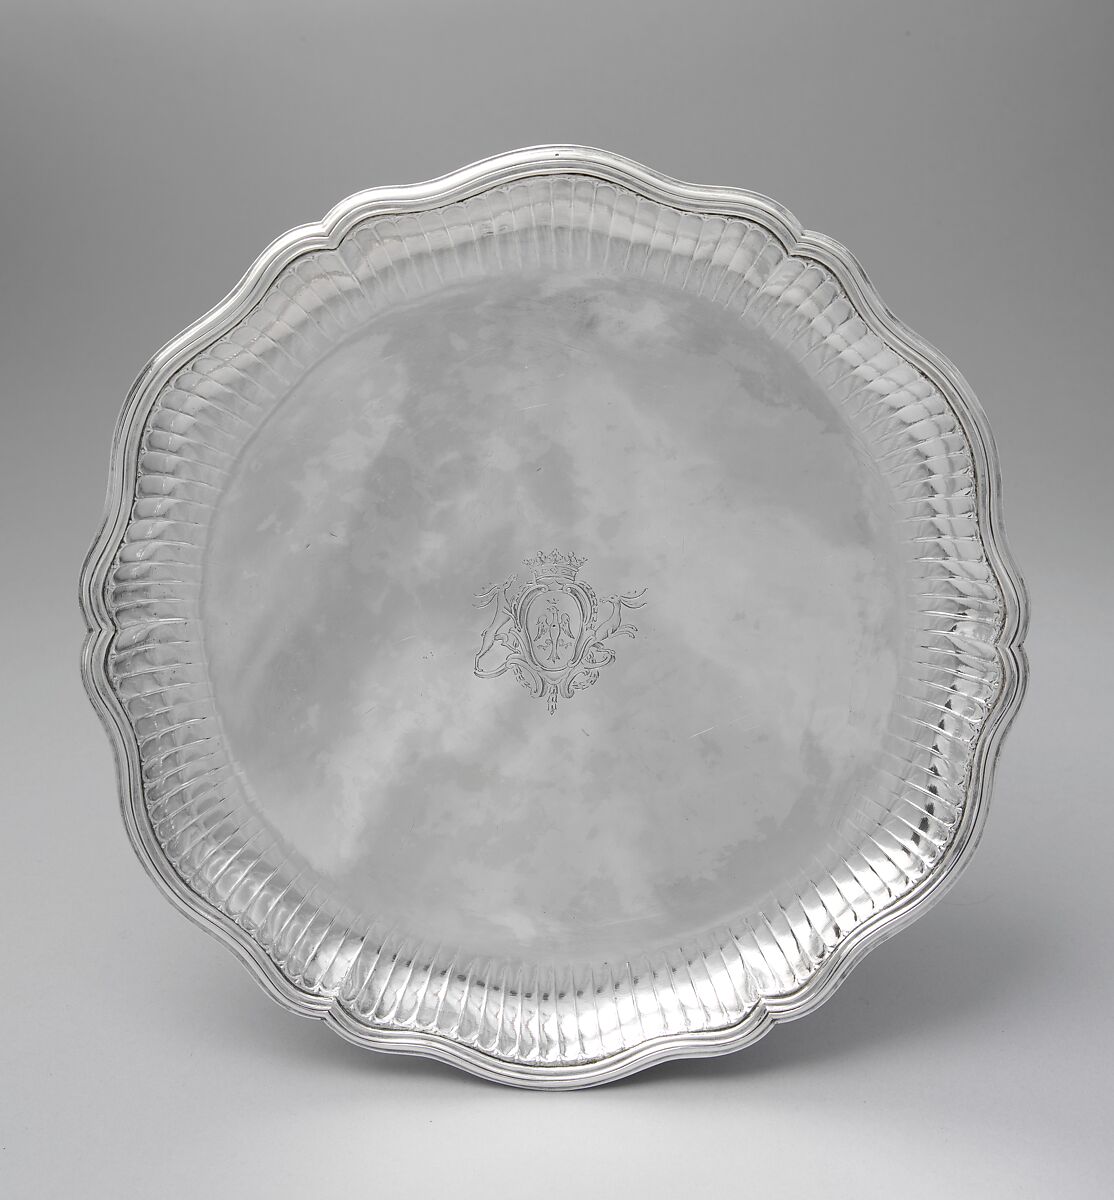 Dish, Antoine Bertrand (master 1759), Silver, French, Draguignan (Aix Mint) 